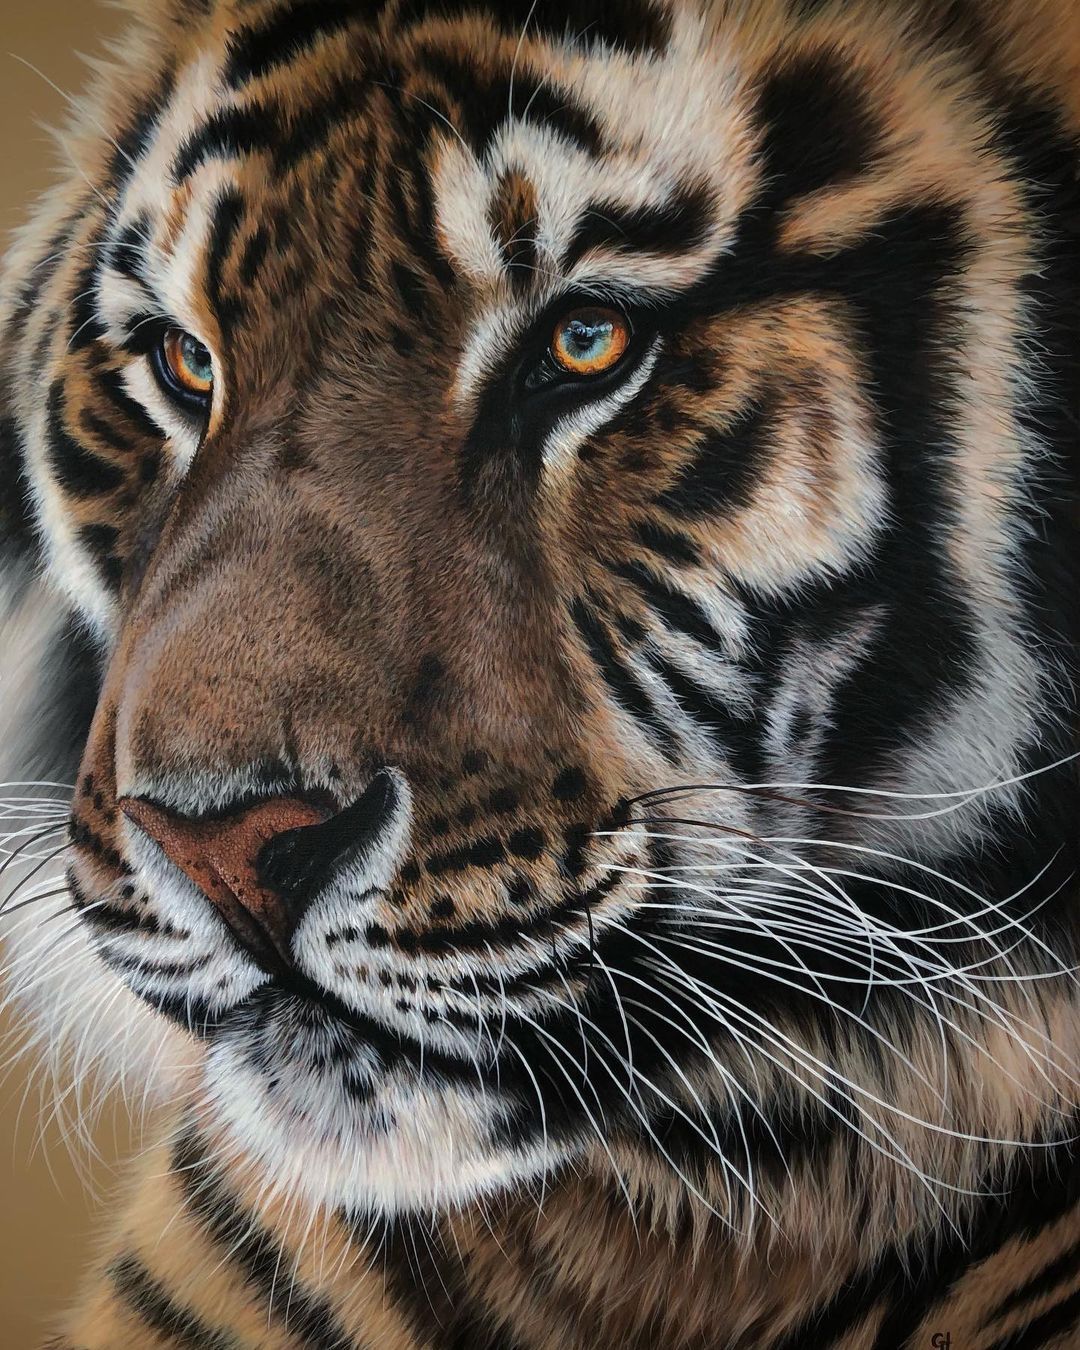 acrylic painting tiger by gina hawkshaw